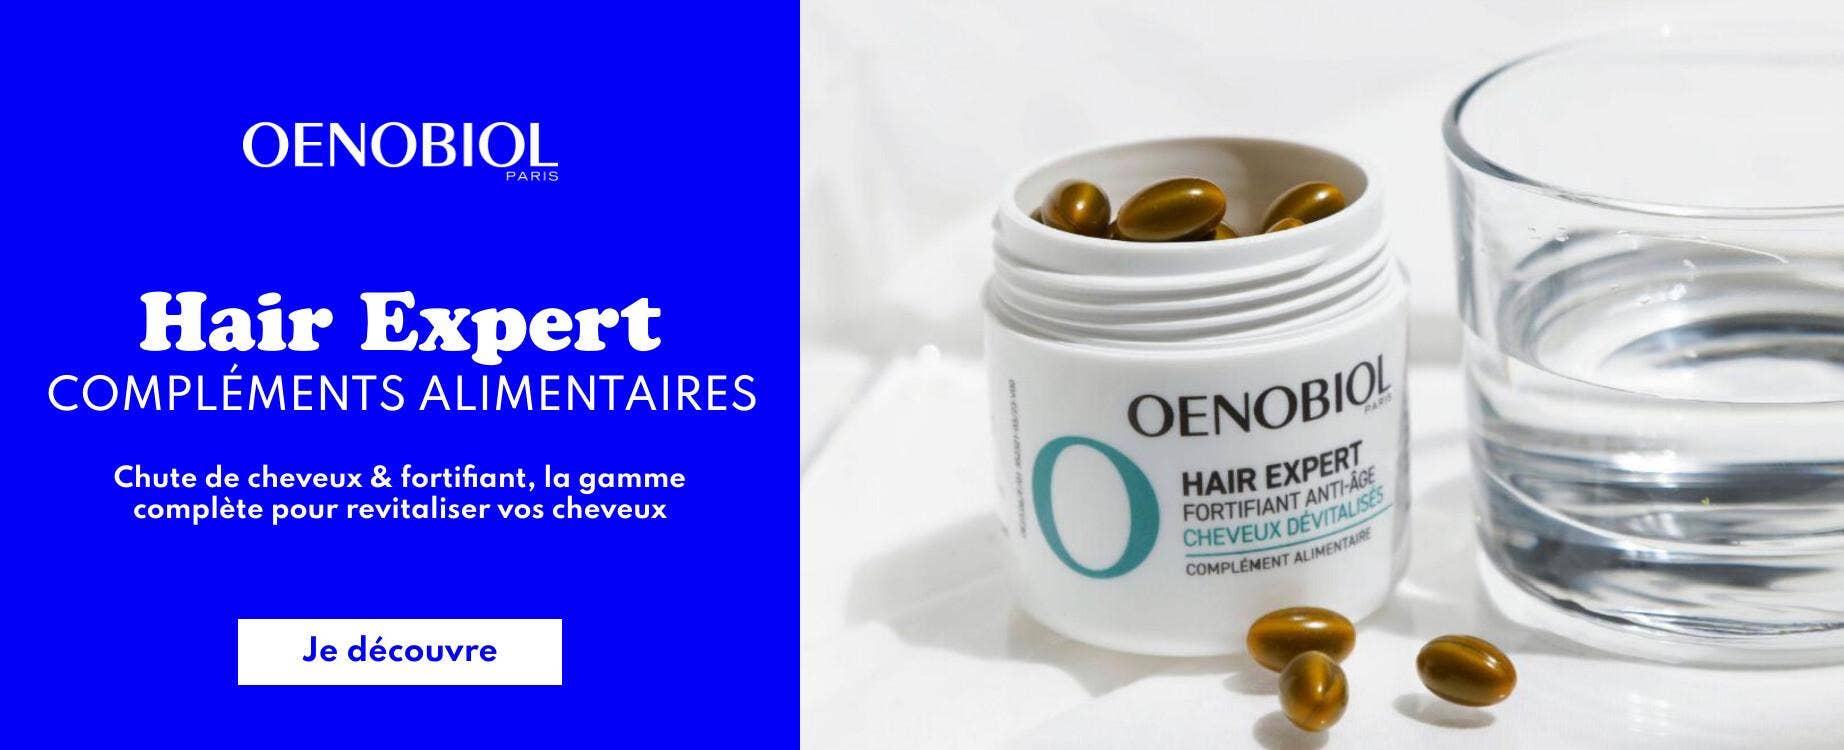 Découvrez Hair Expert d'Oenobiol !